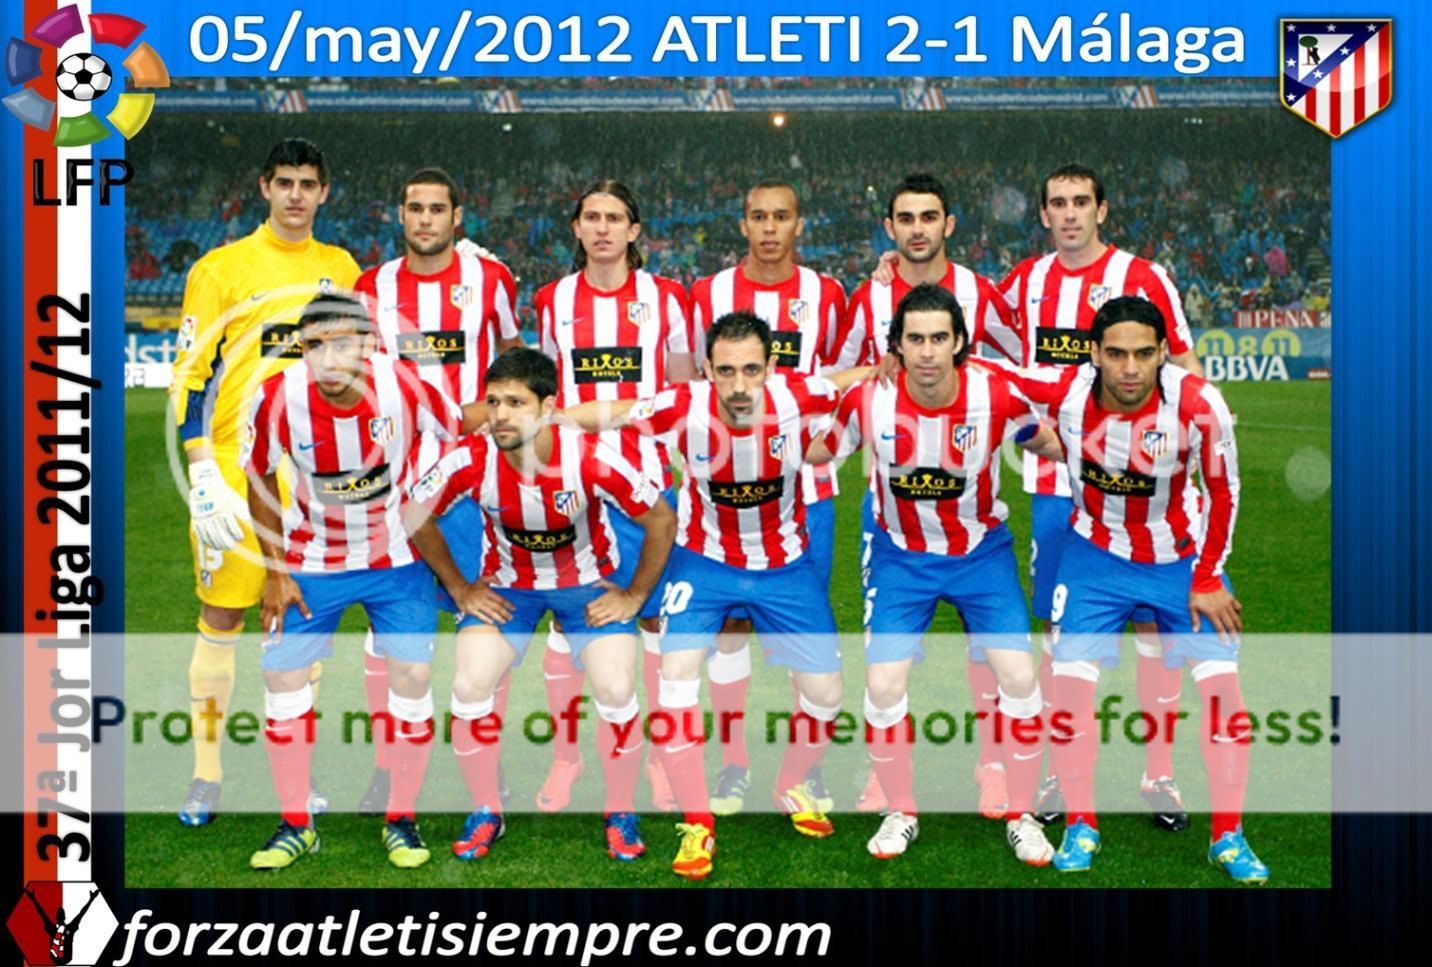 37ª Jor. Liga 2011/12 ATLETI 2-1 Malaga.- El Atlético recobra la figura 012Copiar-12